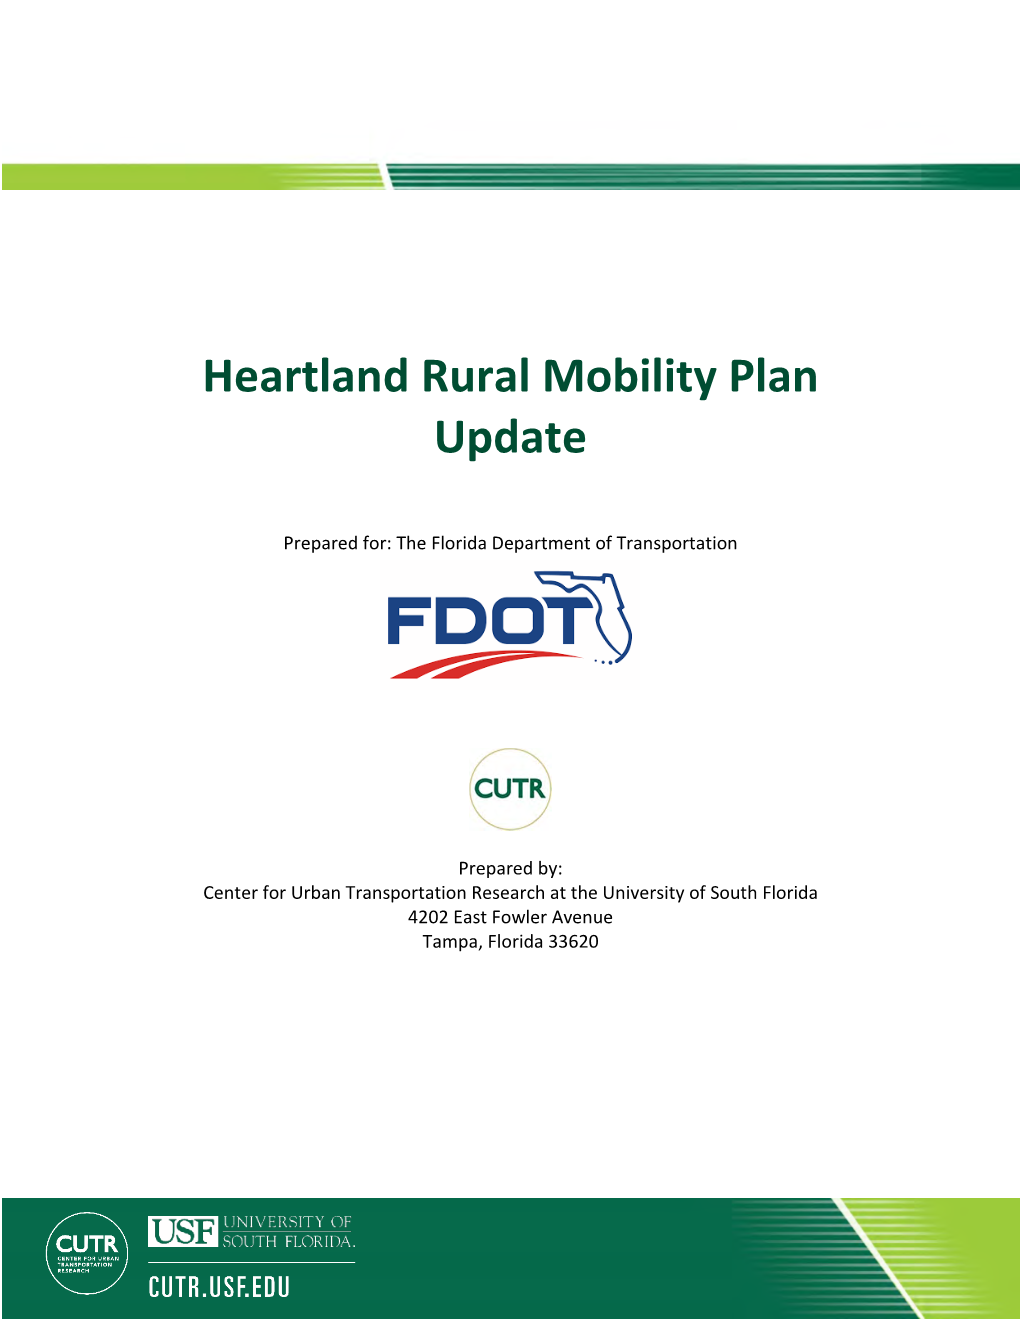 Heartland Rural Mobility Plan Update